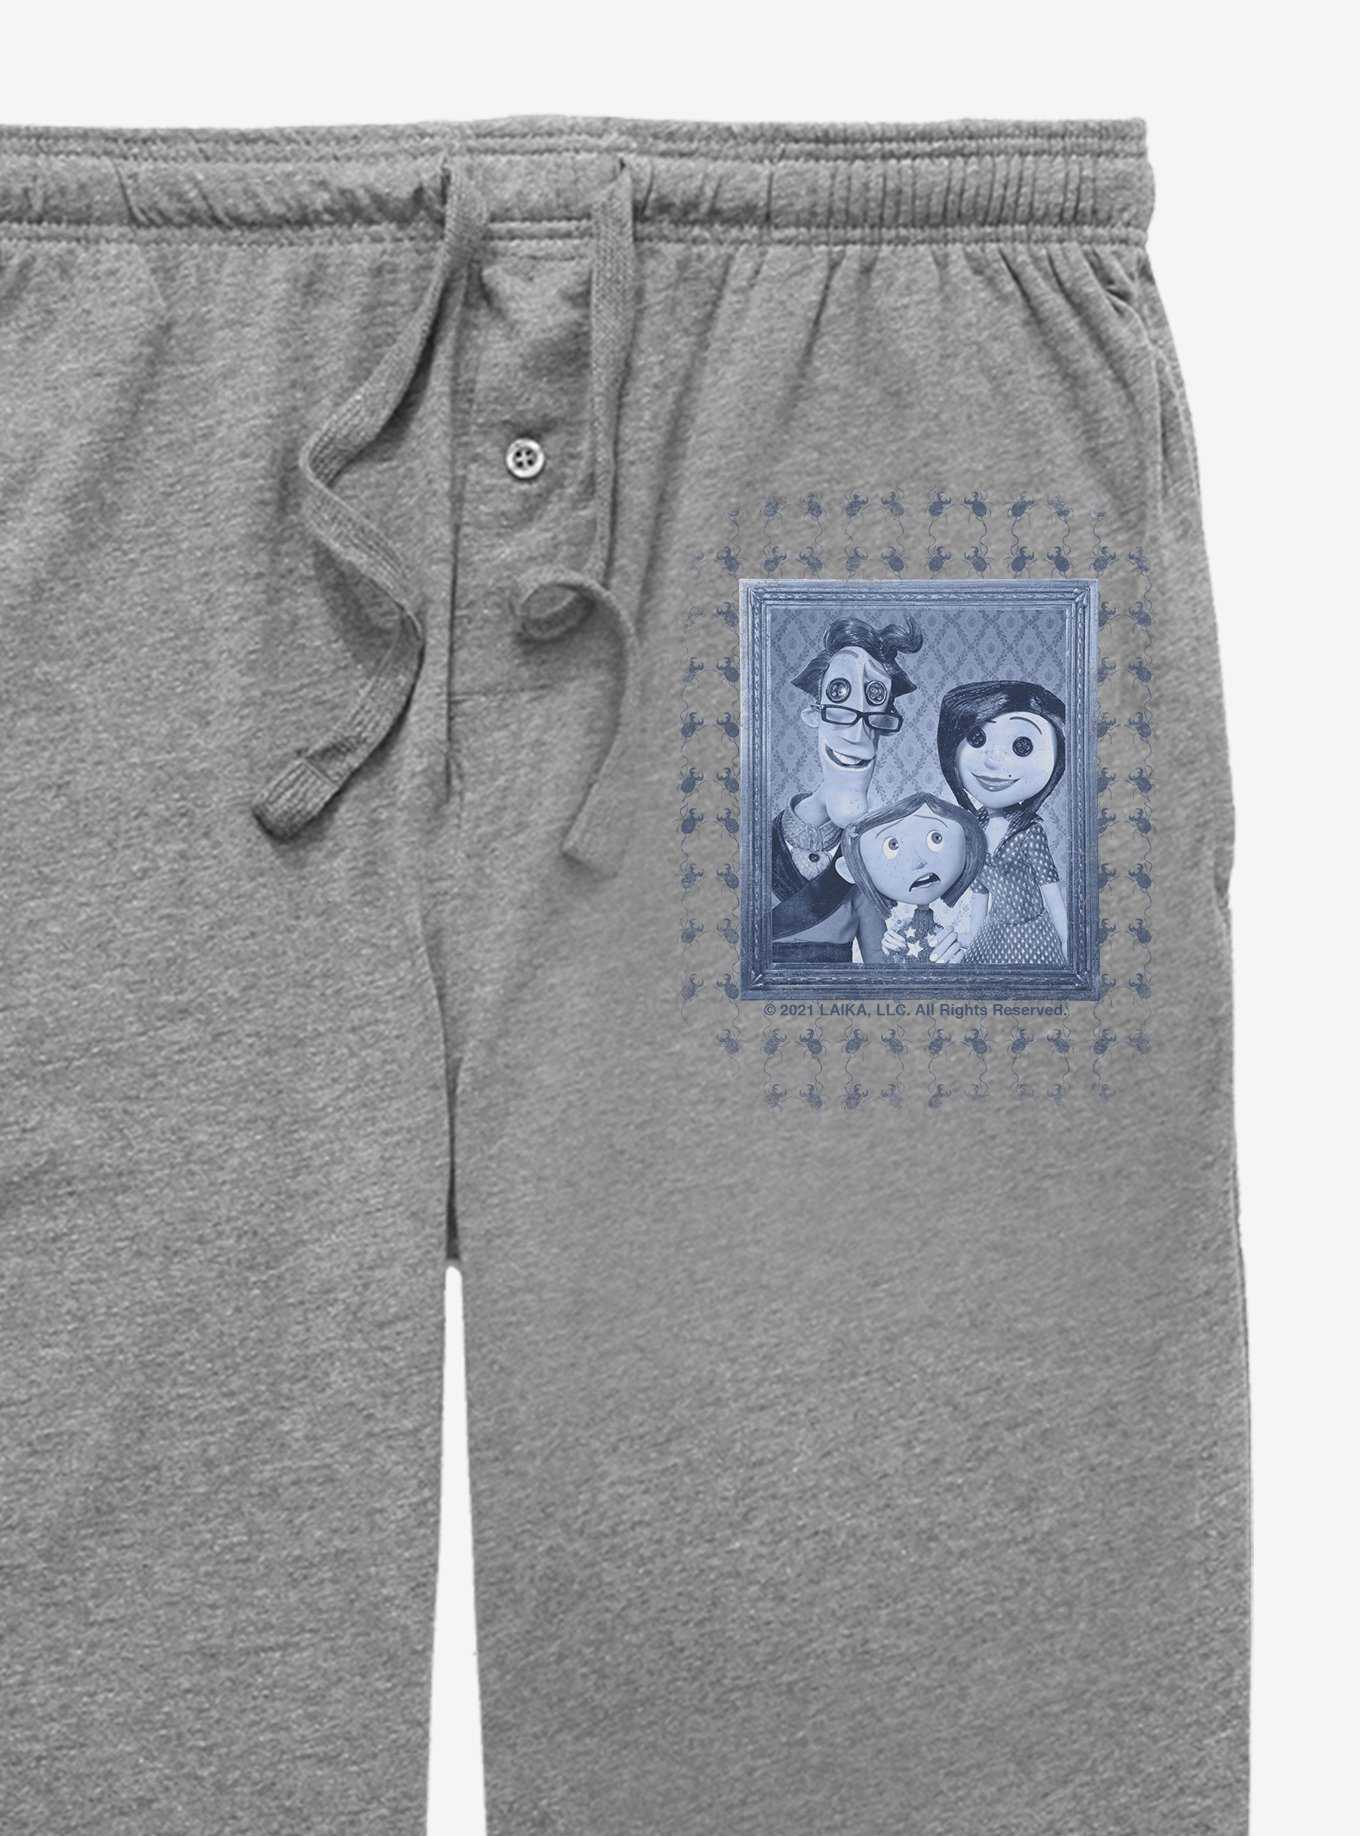 Coraline Family Portrait Pajama Pants, , hi-res